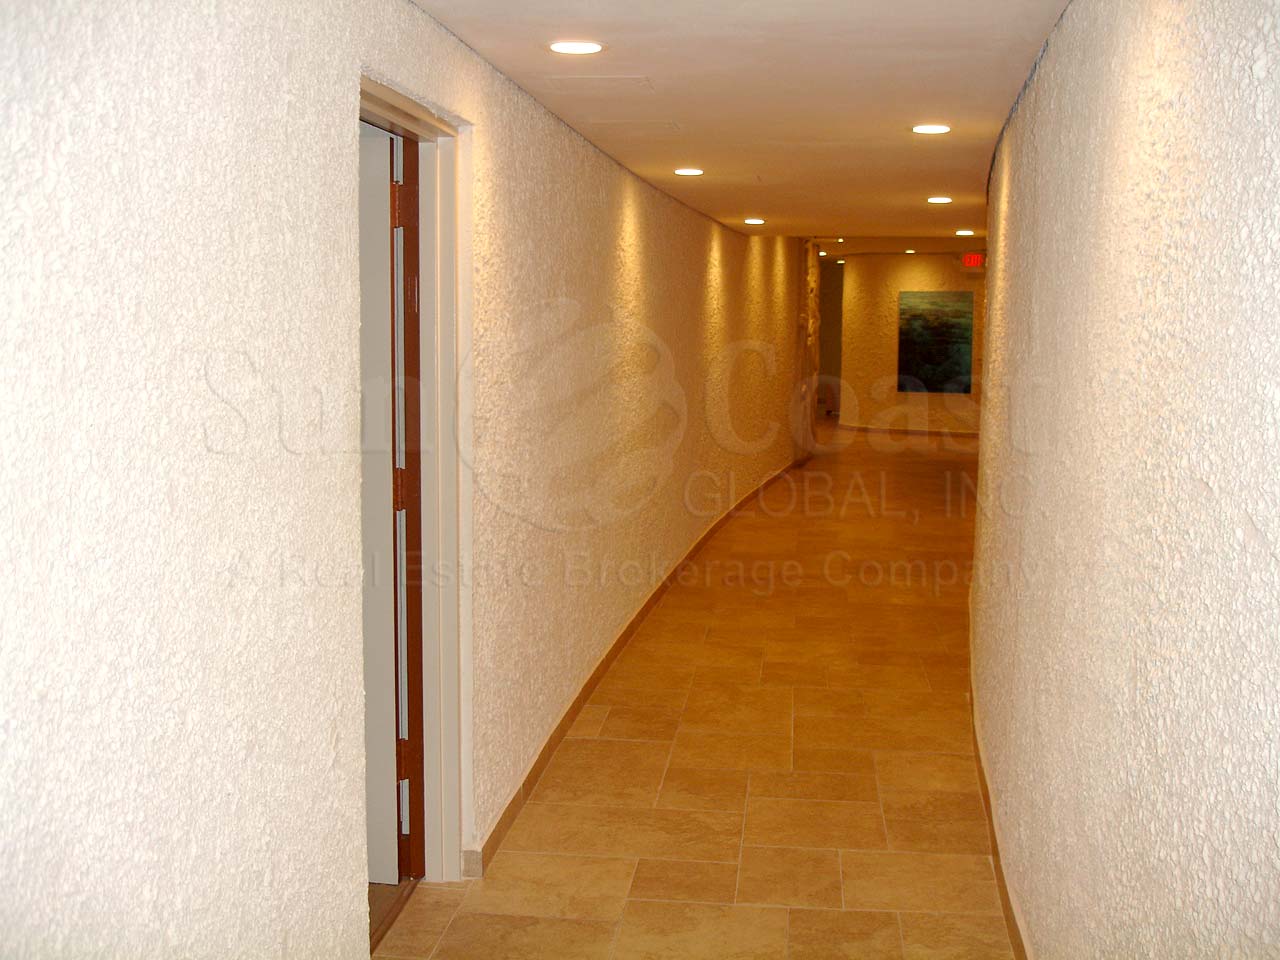 Gulfside Indoor Hallway